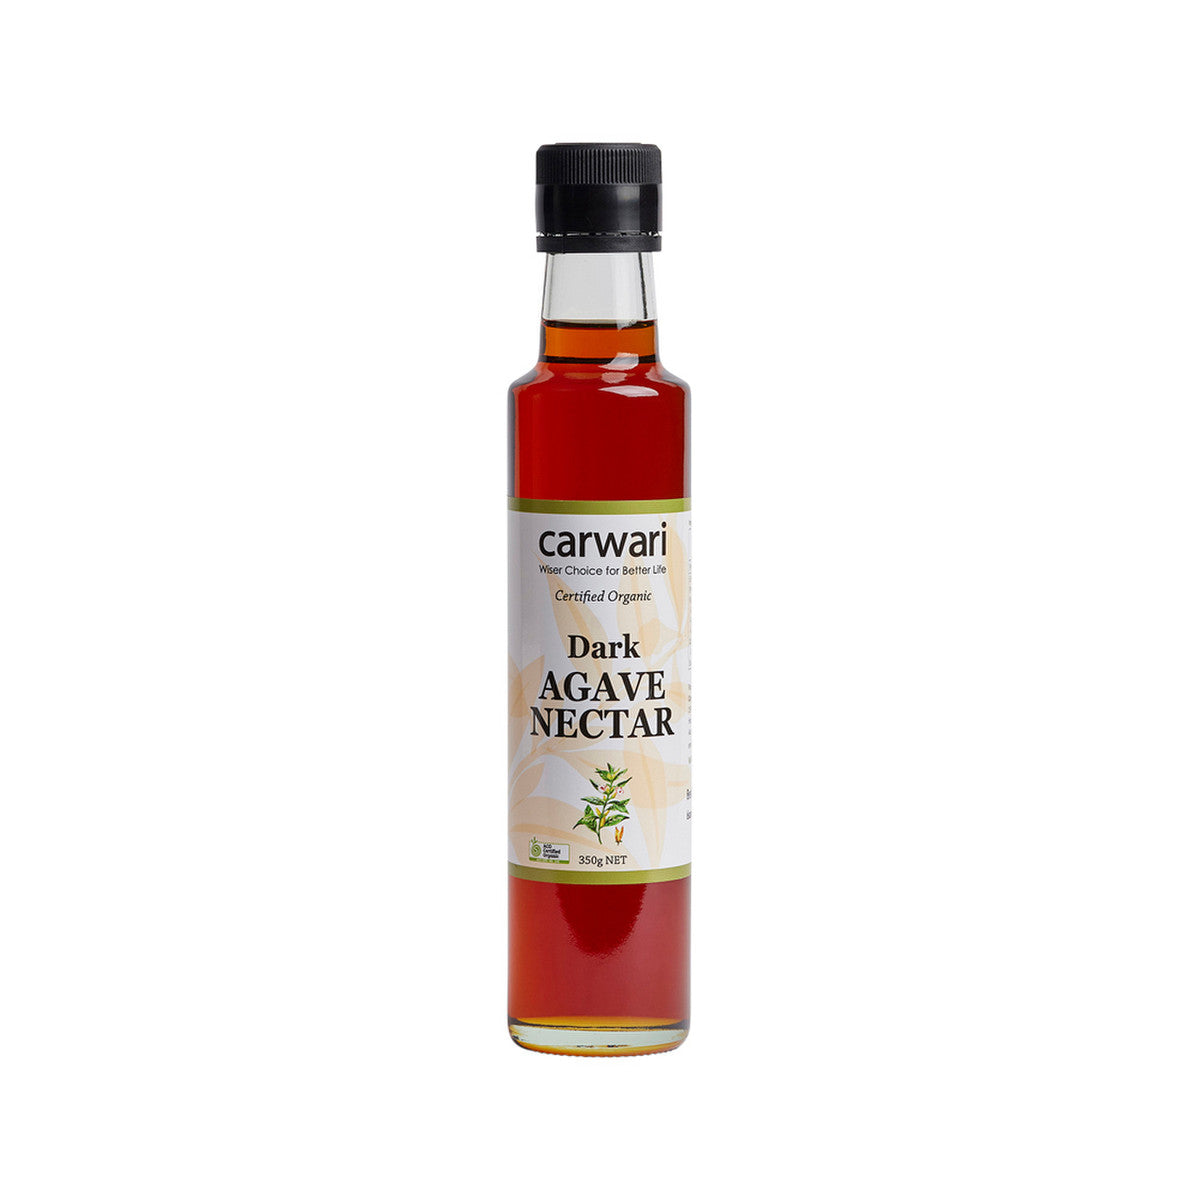 Carwari Agave Nectar 350ml, Dark & Certified Organic